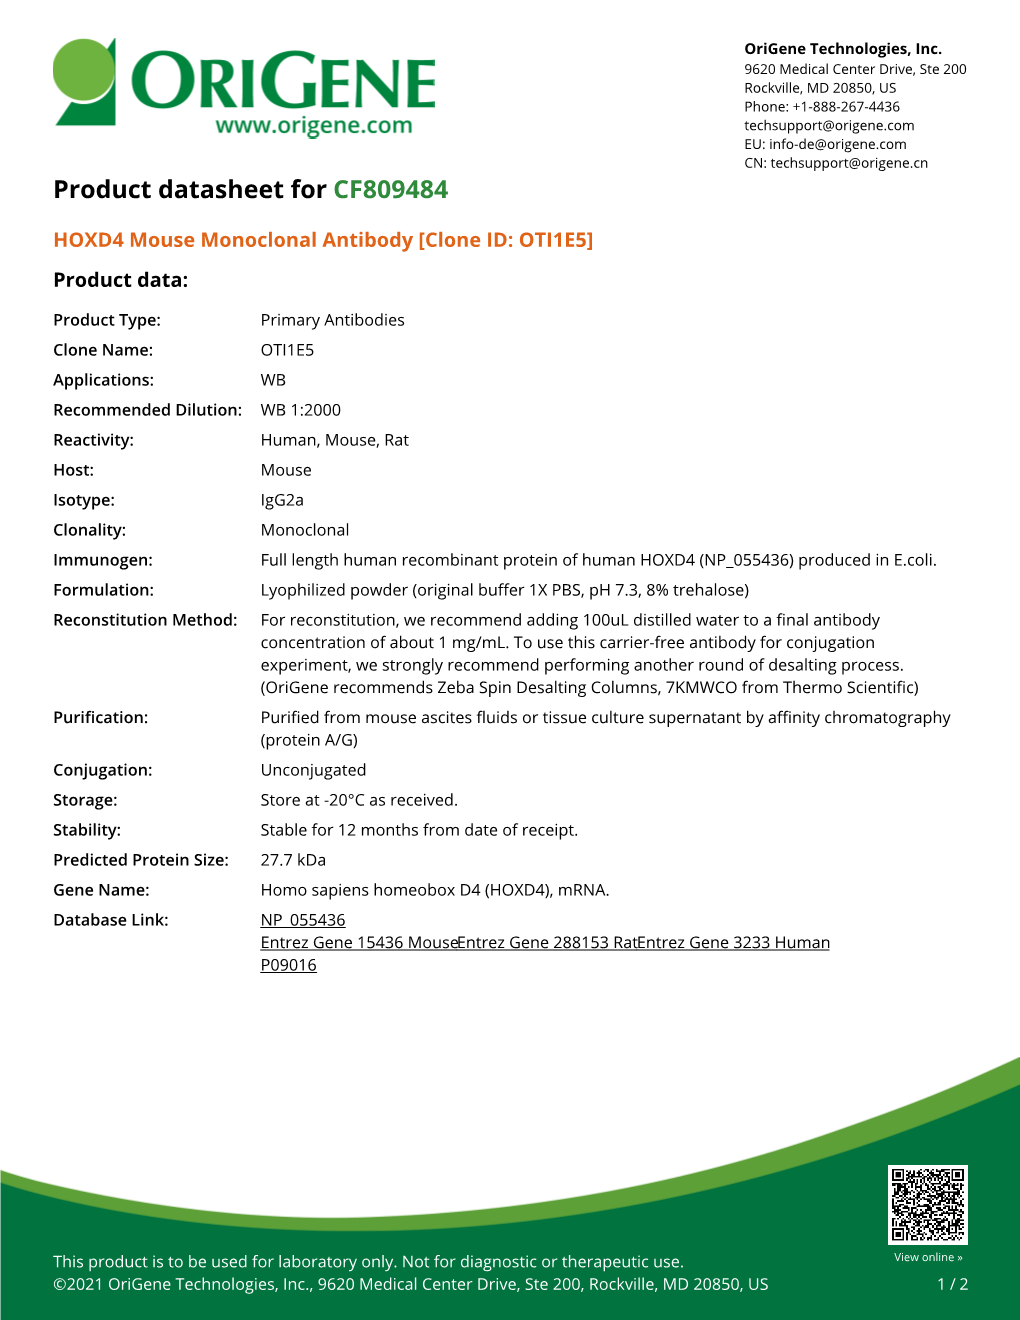 HOXD4 Mouse Monoclonal Antibody [Clone ID: OTI1E5] Product Data